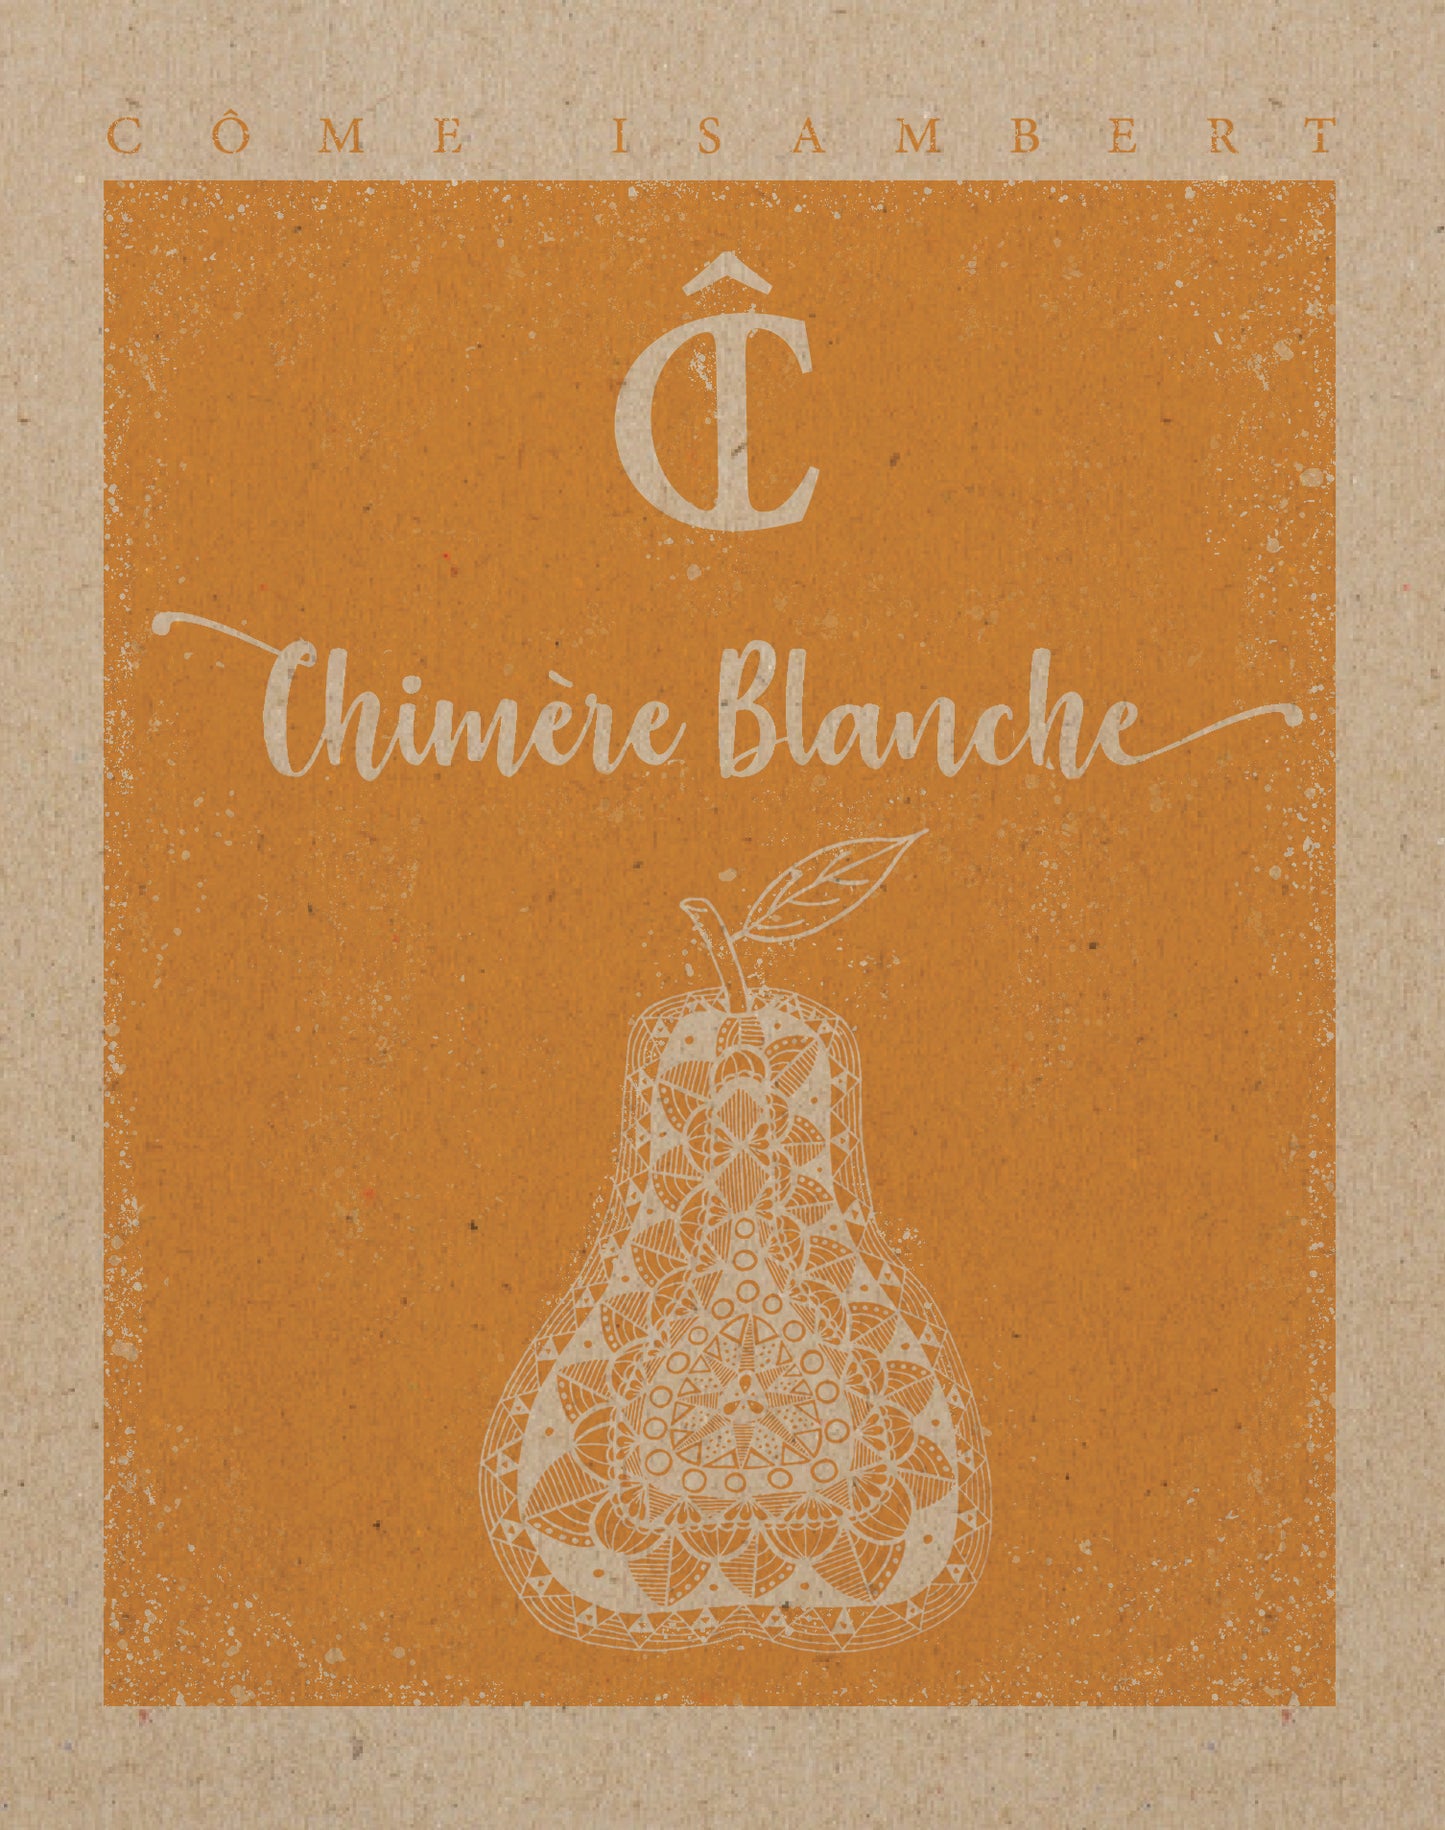 Côme Isambert, Chimere Blanche 2020 - Pear, Chardonnay, Sauvignon Blend